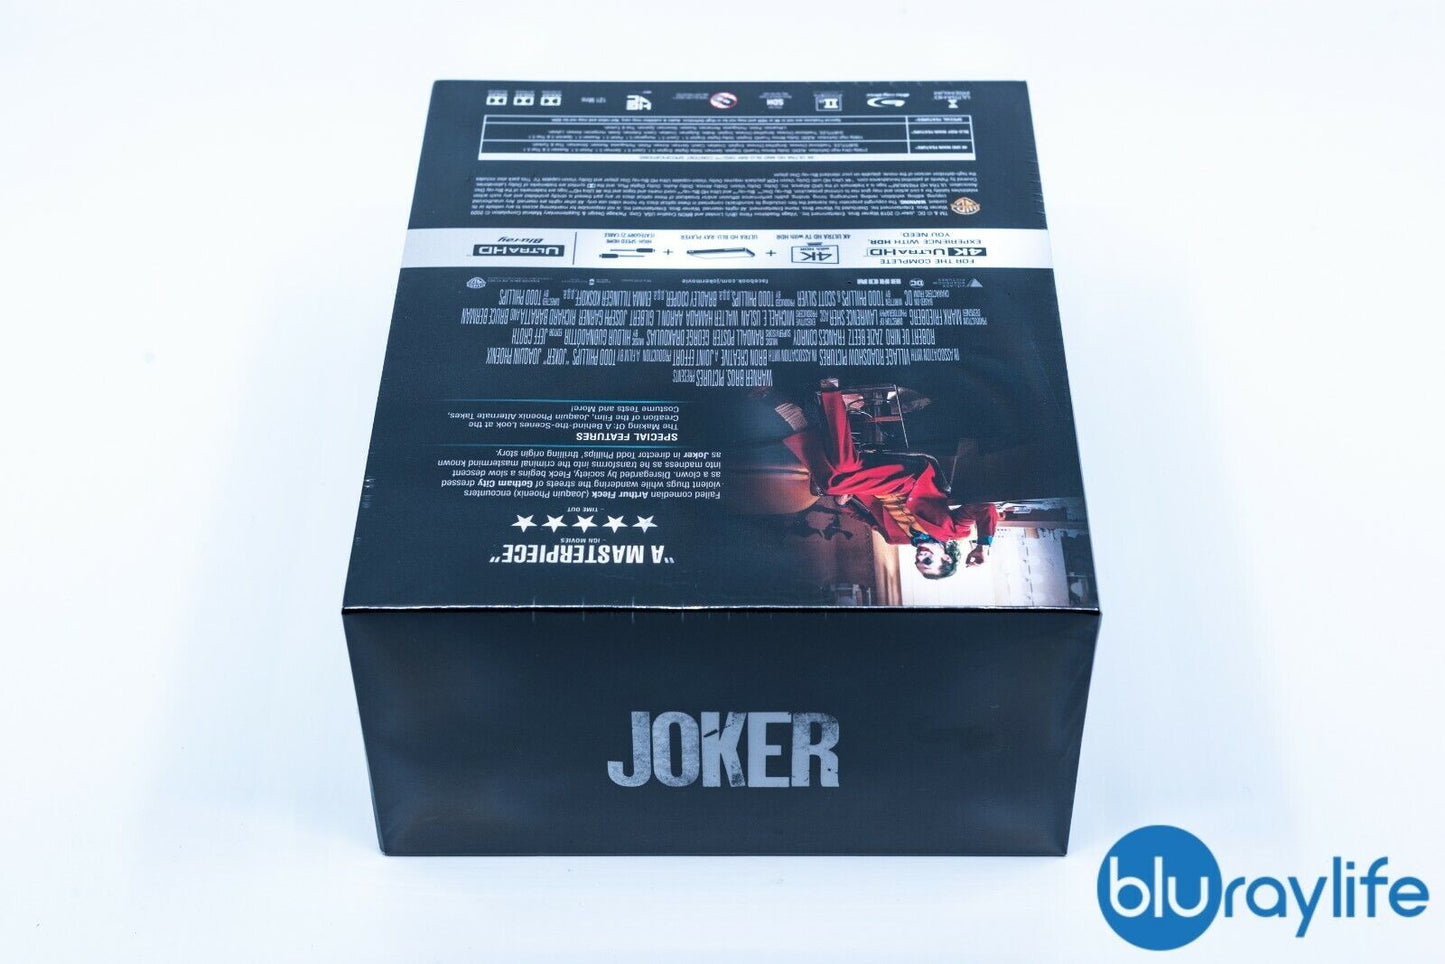 Joker 4K Blu-ray Steelbook Manta Lab Exclusive ME#29 One Click Box Set